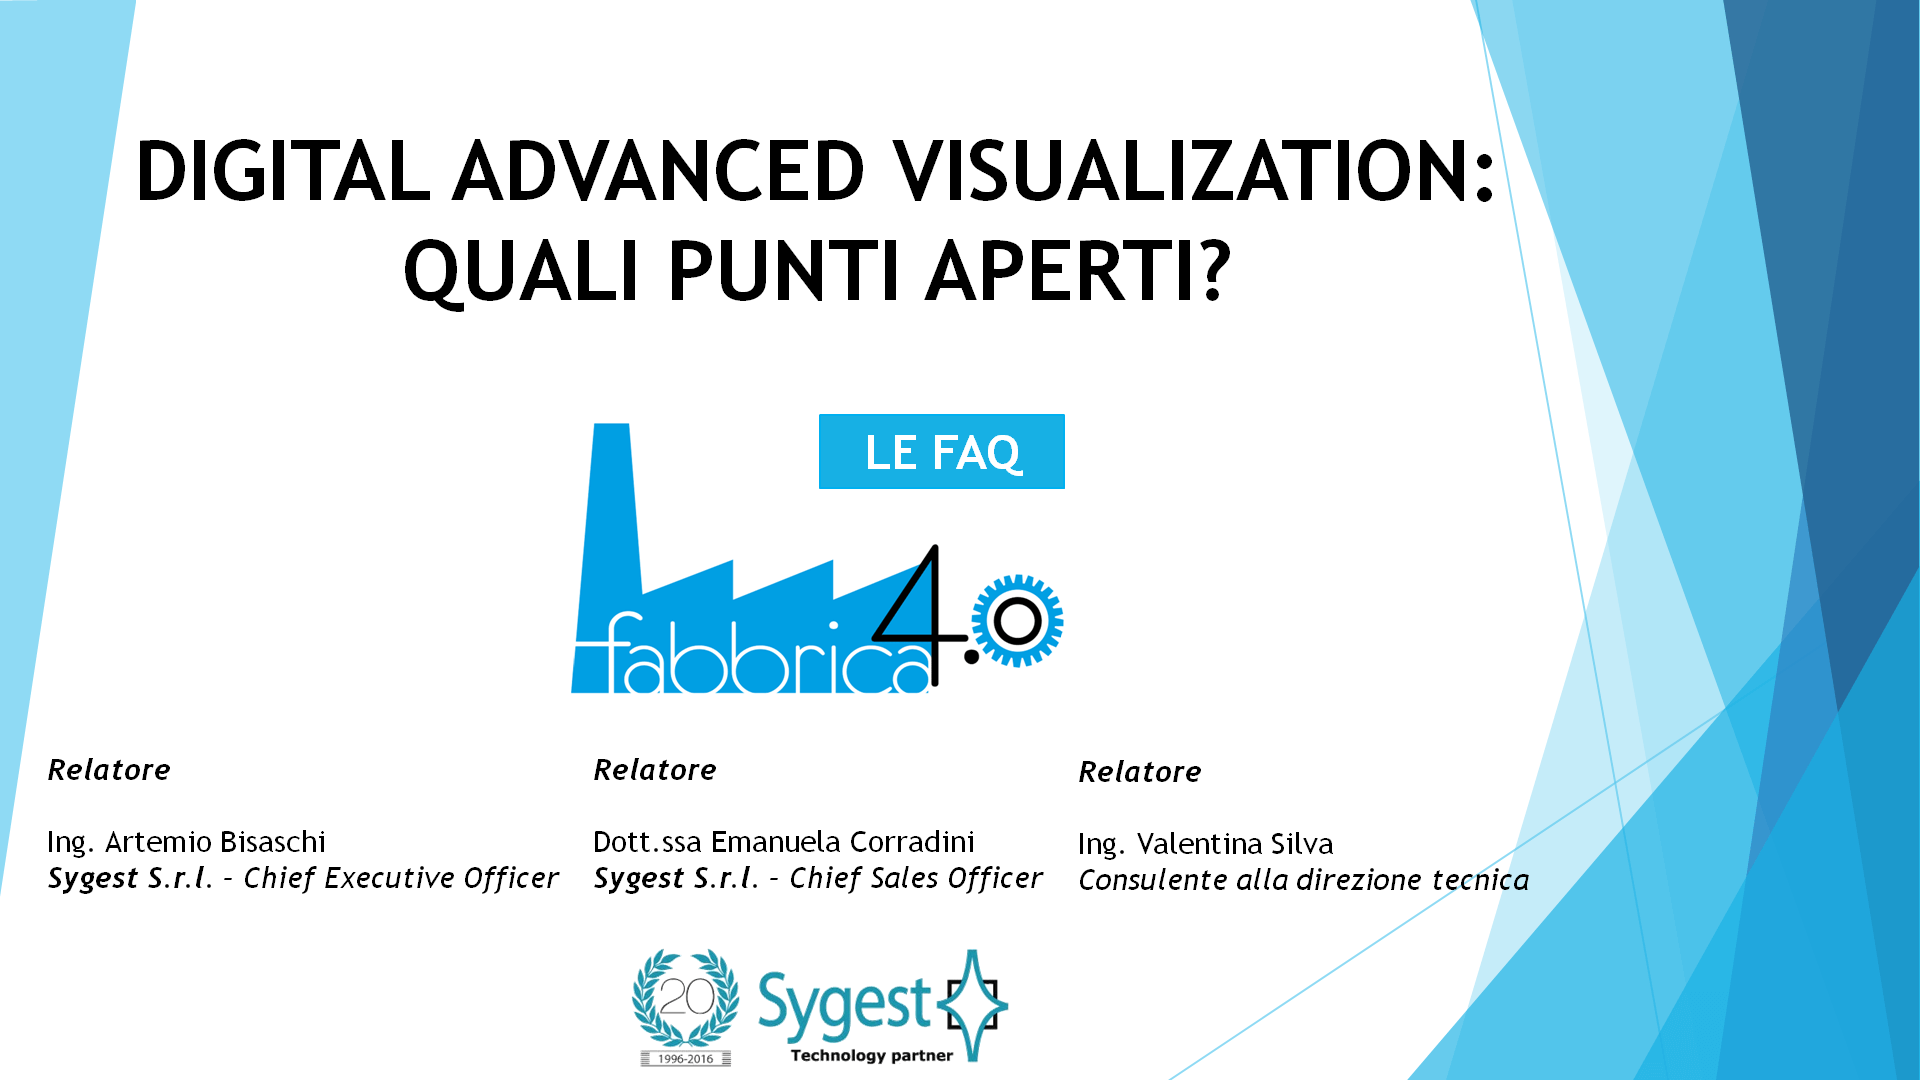 Fabbrica 4.0 - Digital Advanced Visualization